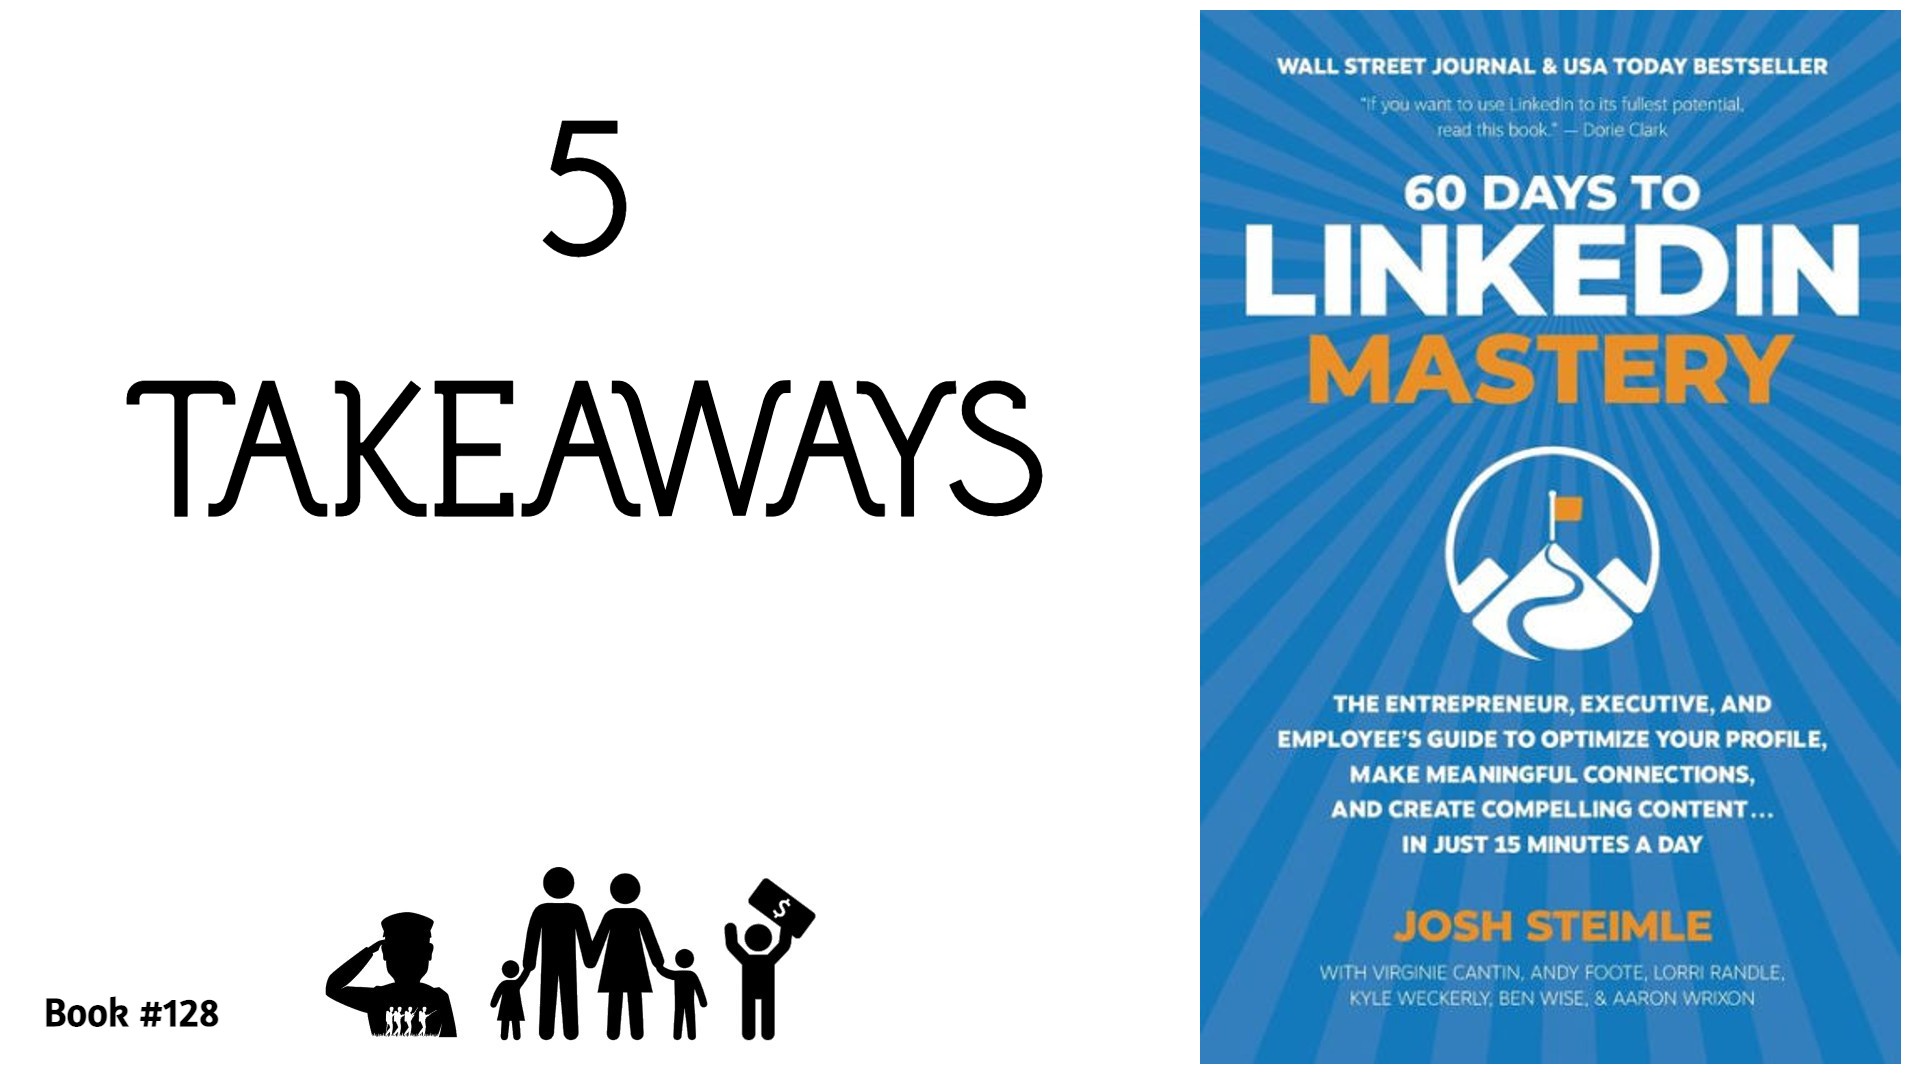 5 Takeaways from “60 Days to LinkedIn Mastery”